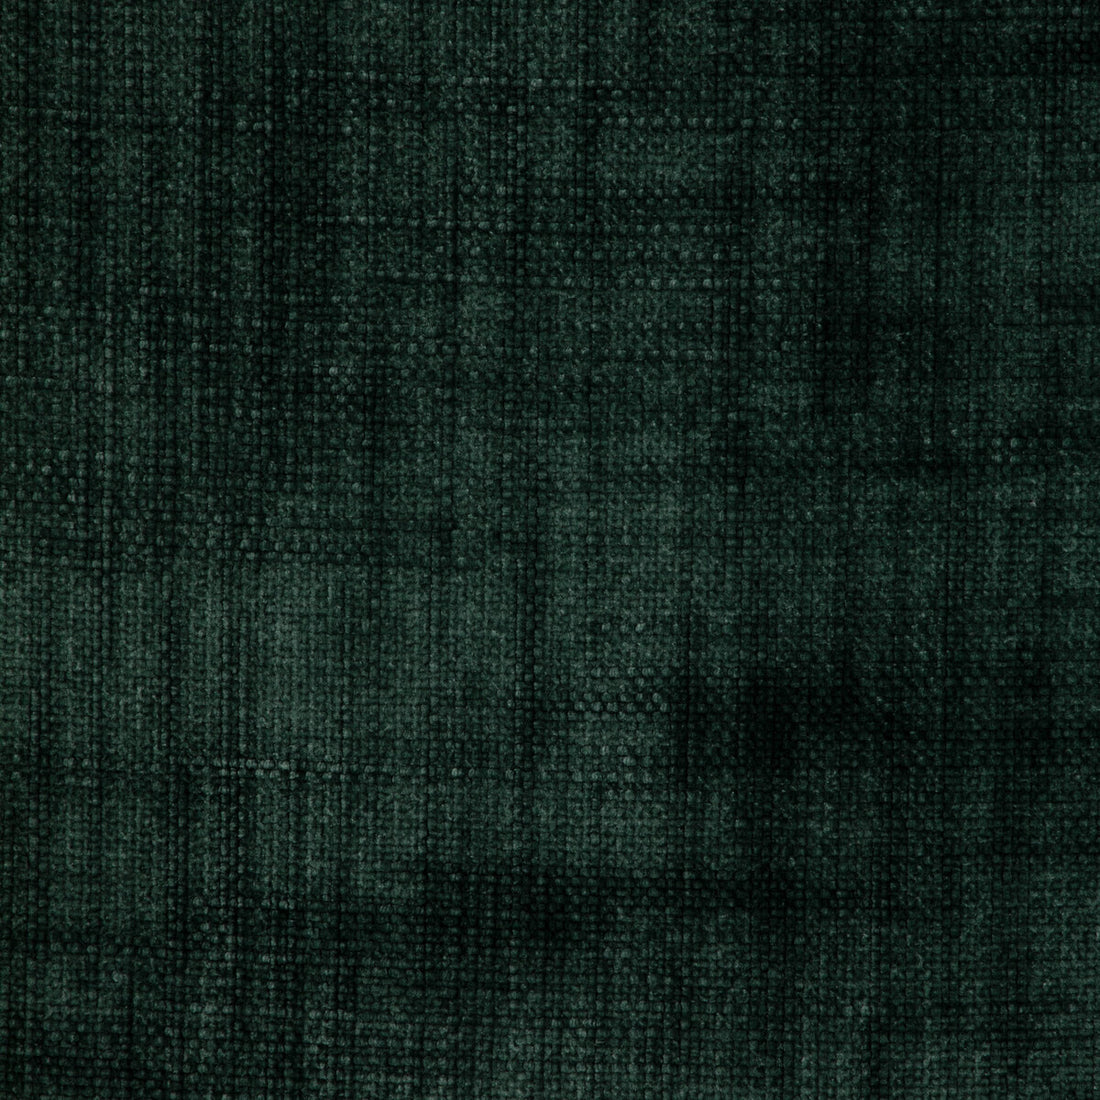 Kravet Smart fabric in 36991-3 color - pattern 36991.3.0 - by Kravet Smart in the Performance Kravetarmor collection